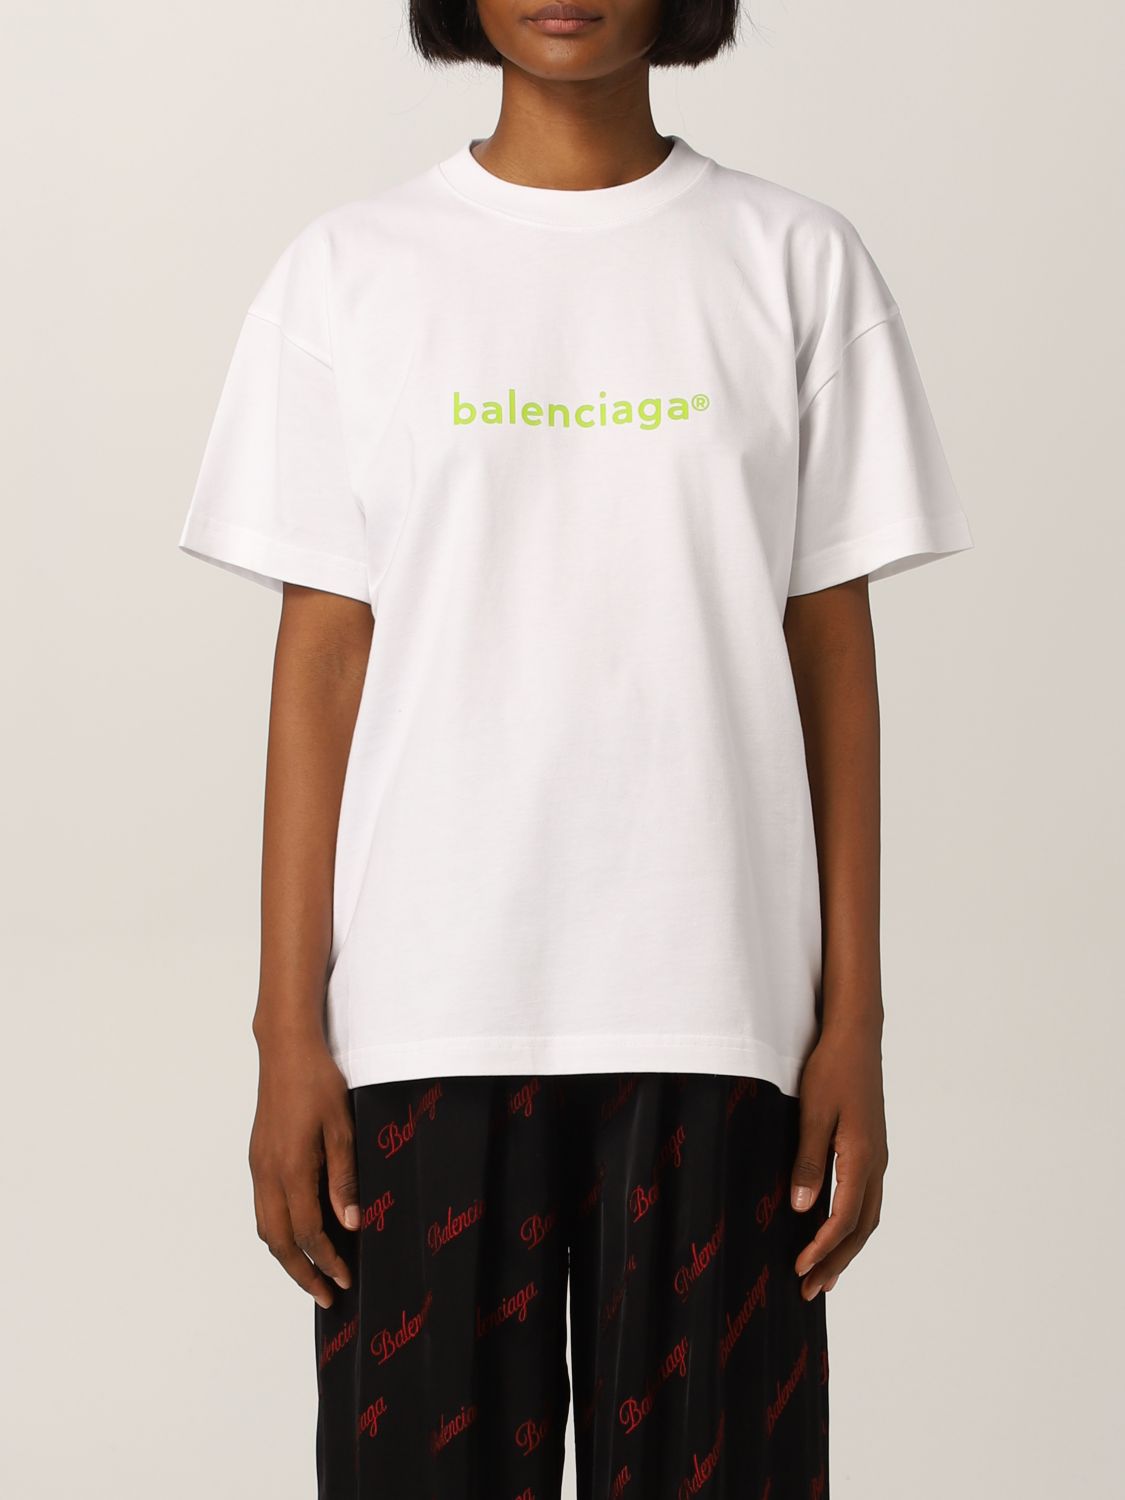 BALENCIAGA: t-shirt for woman - White | Balenciaga t-shirt 612965 TIV54 ...